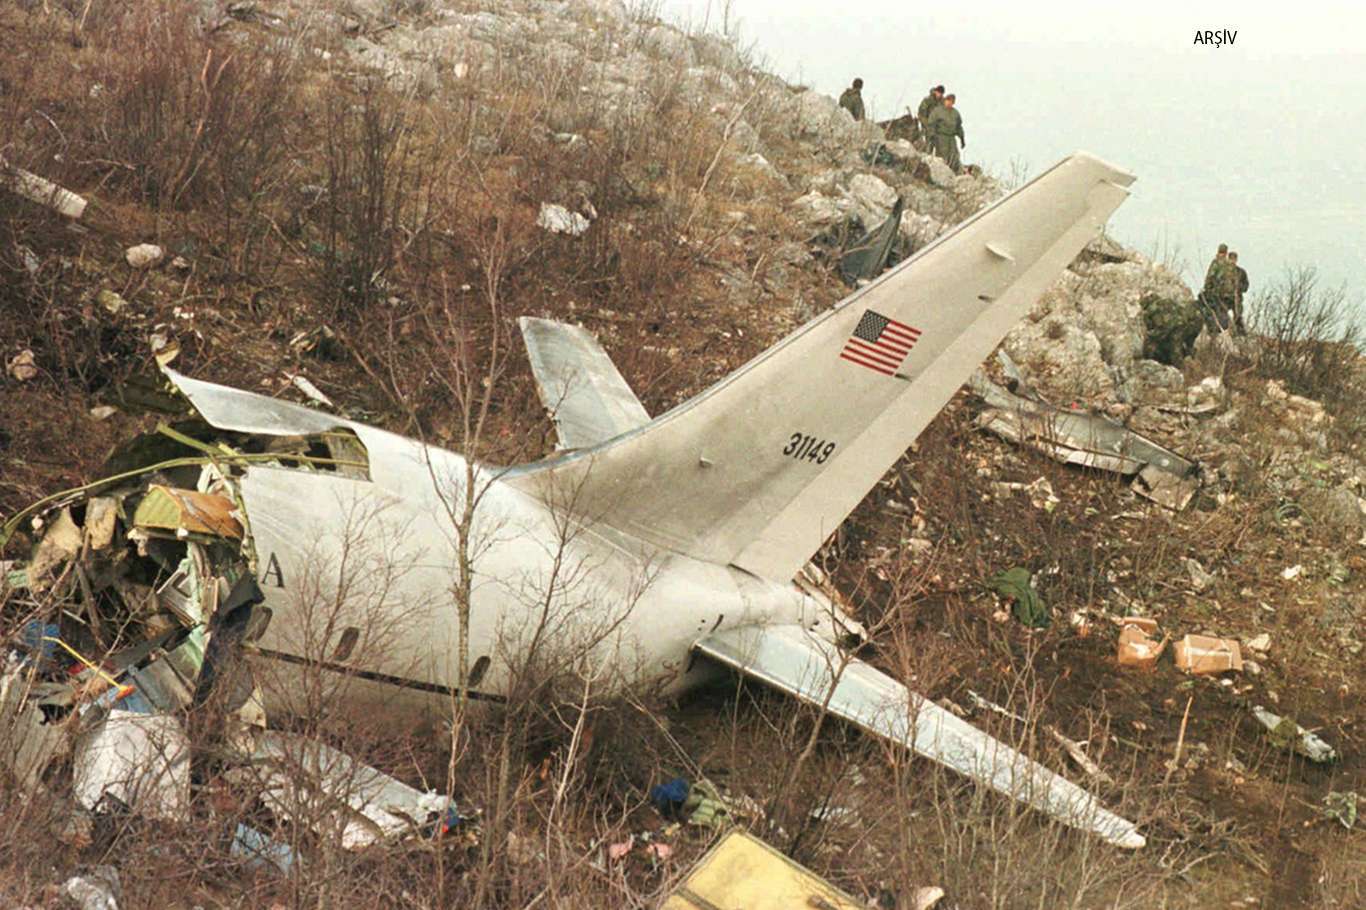 6 people killed in Alaska plane crash